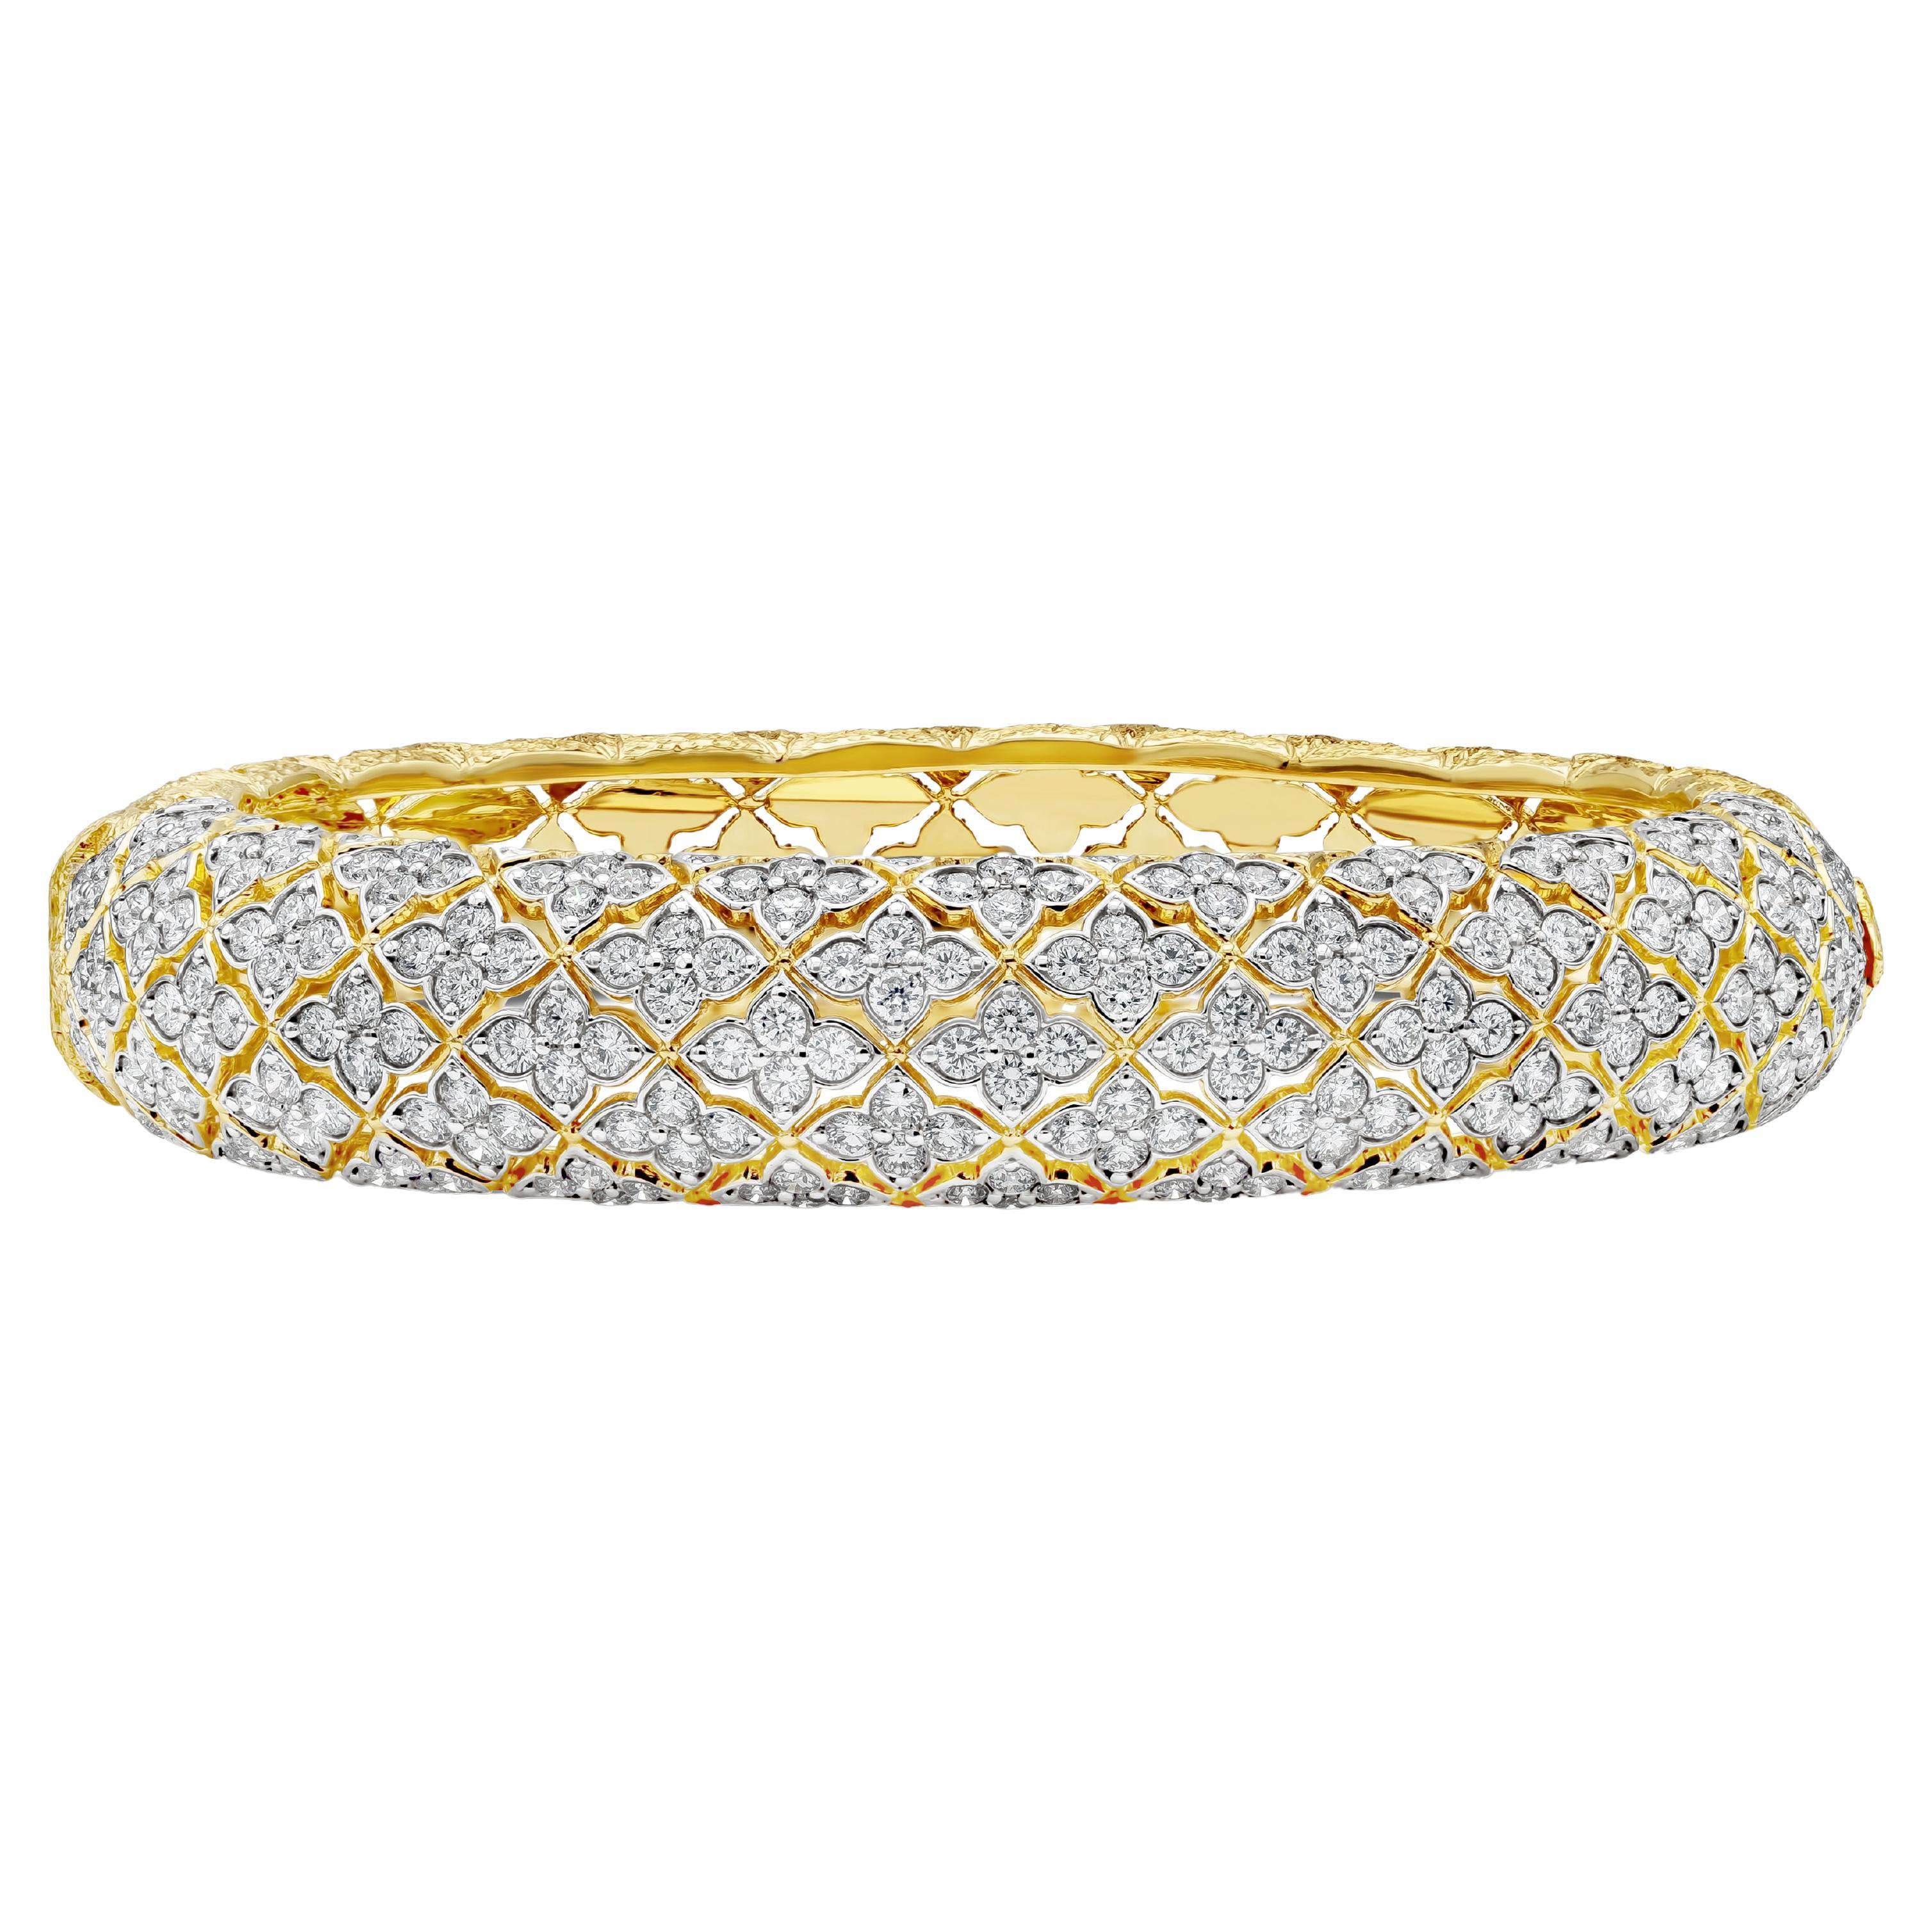 6.64 Carat Total Round Diamond in Floral Design Bangle Fashion Bracelet